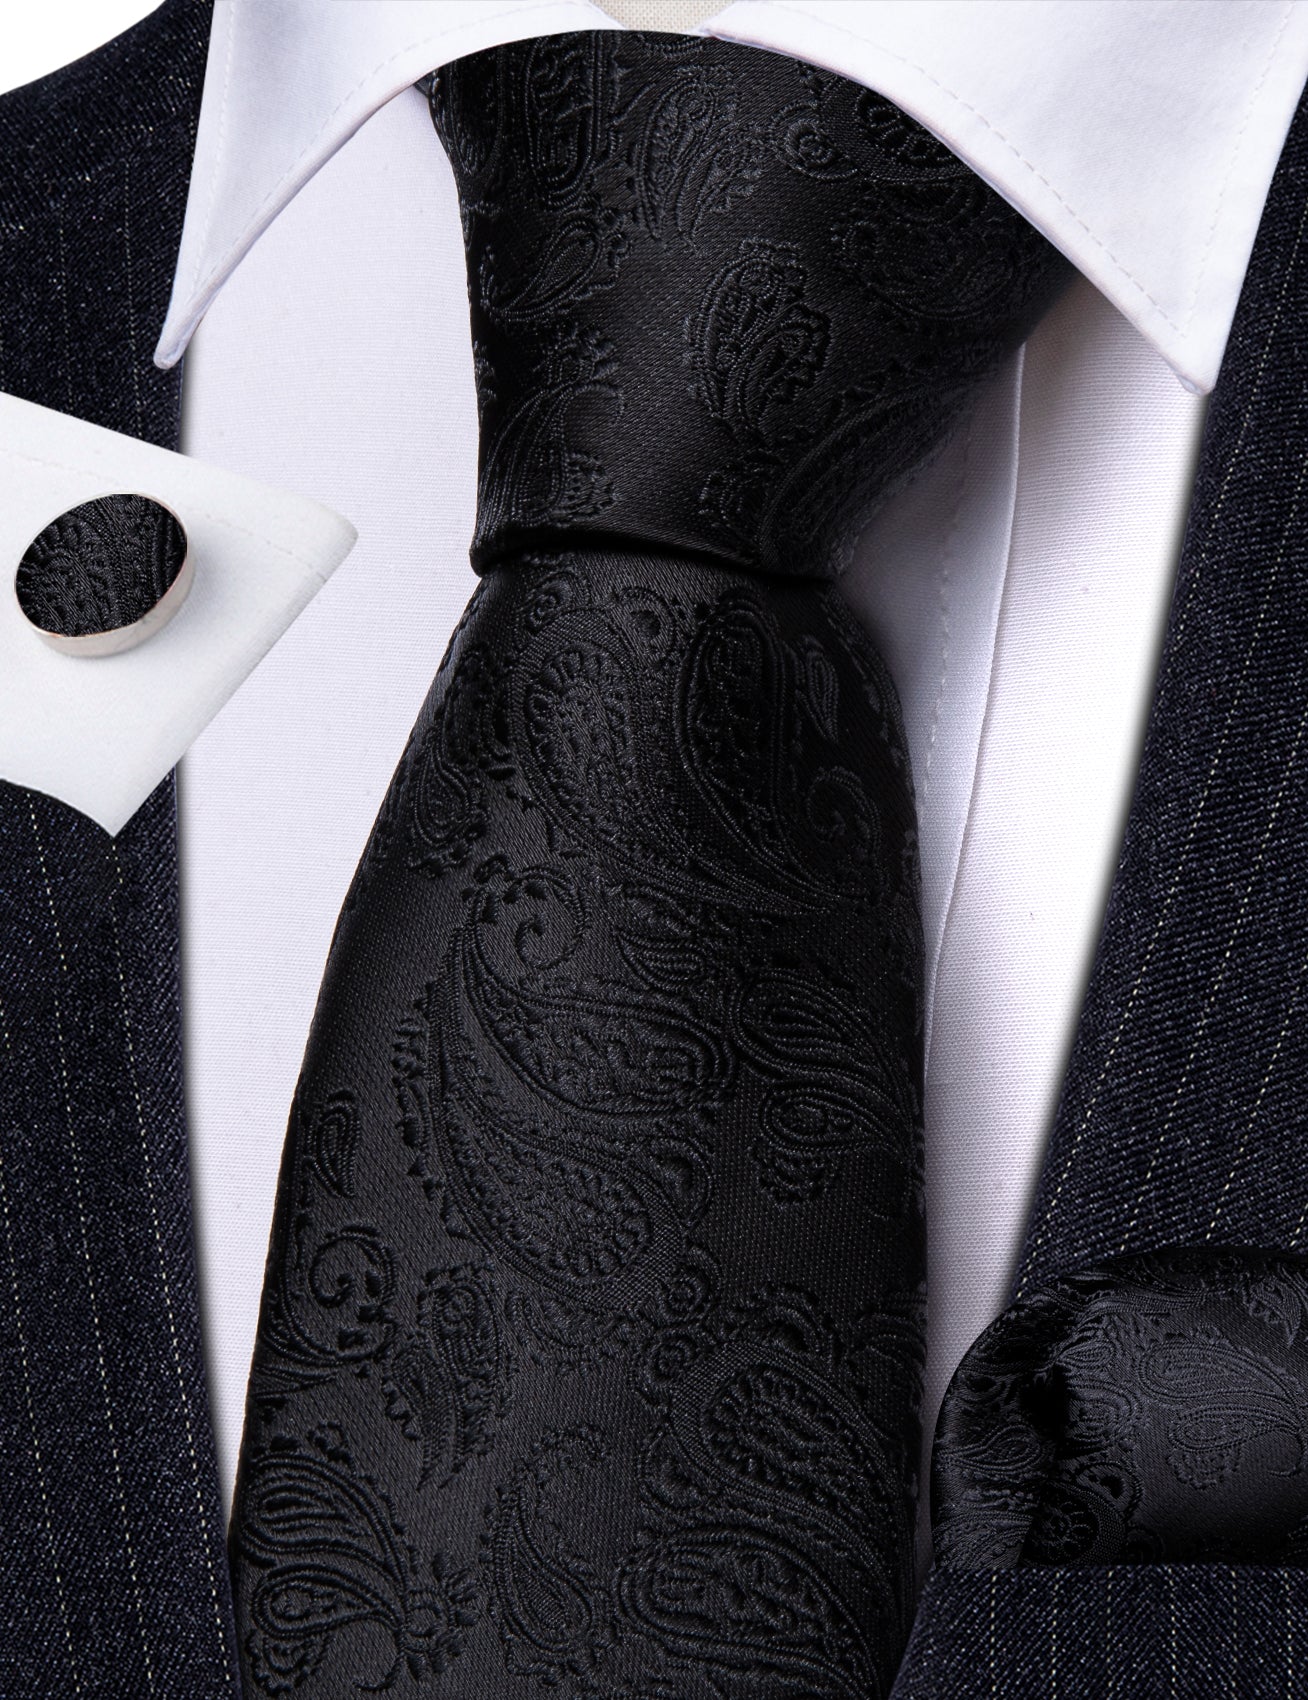 Black Paisley Silk 63 Inches Extra Long Tie Pocket Square Cufflinks Set